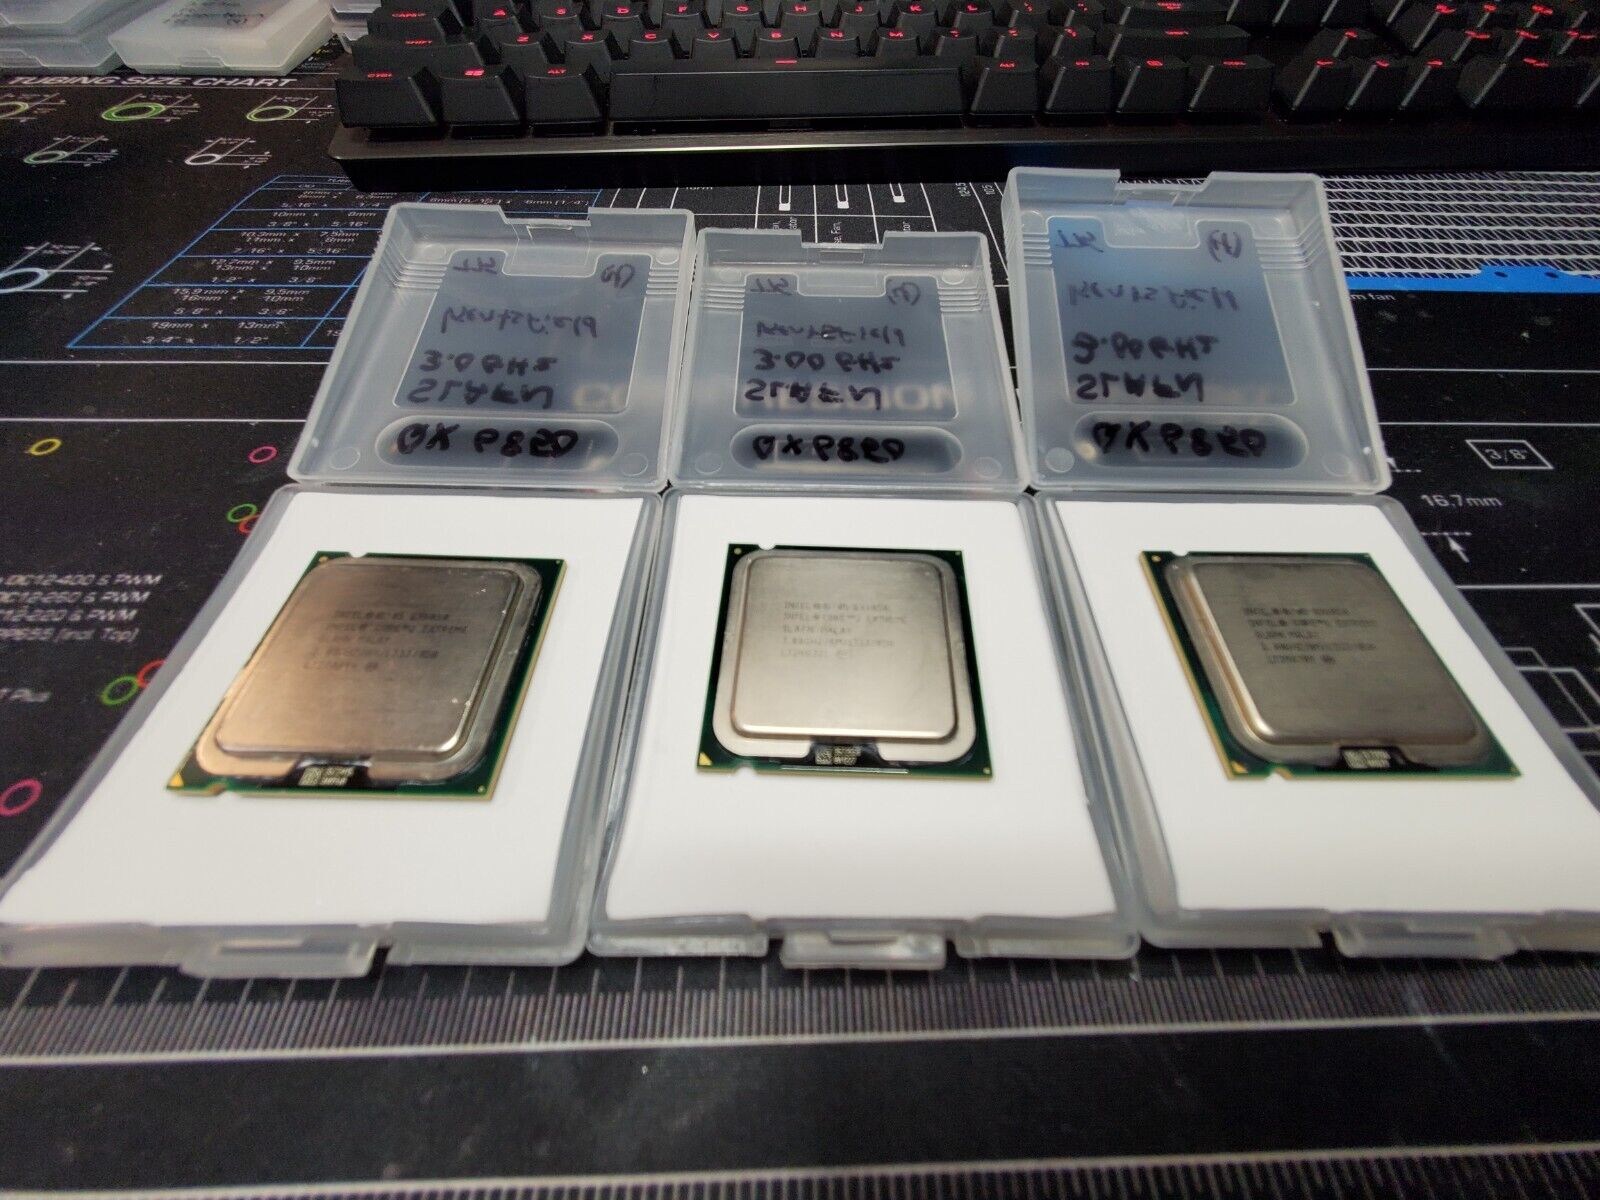 Intel Core 2 Extreme QX6850 (SLAFN) LGA775 3.0GHz Quad-Core CPU